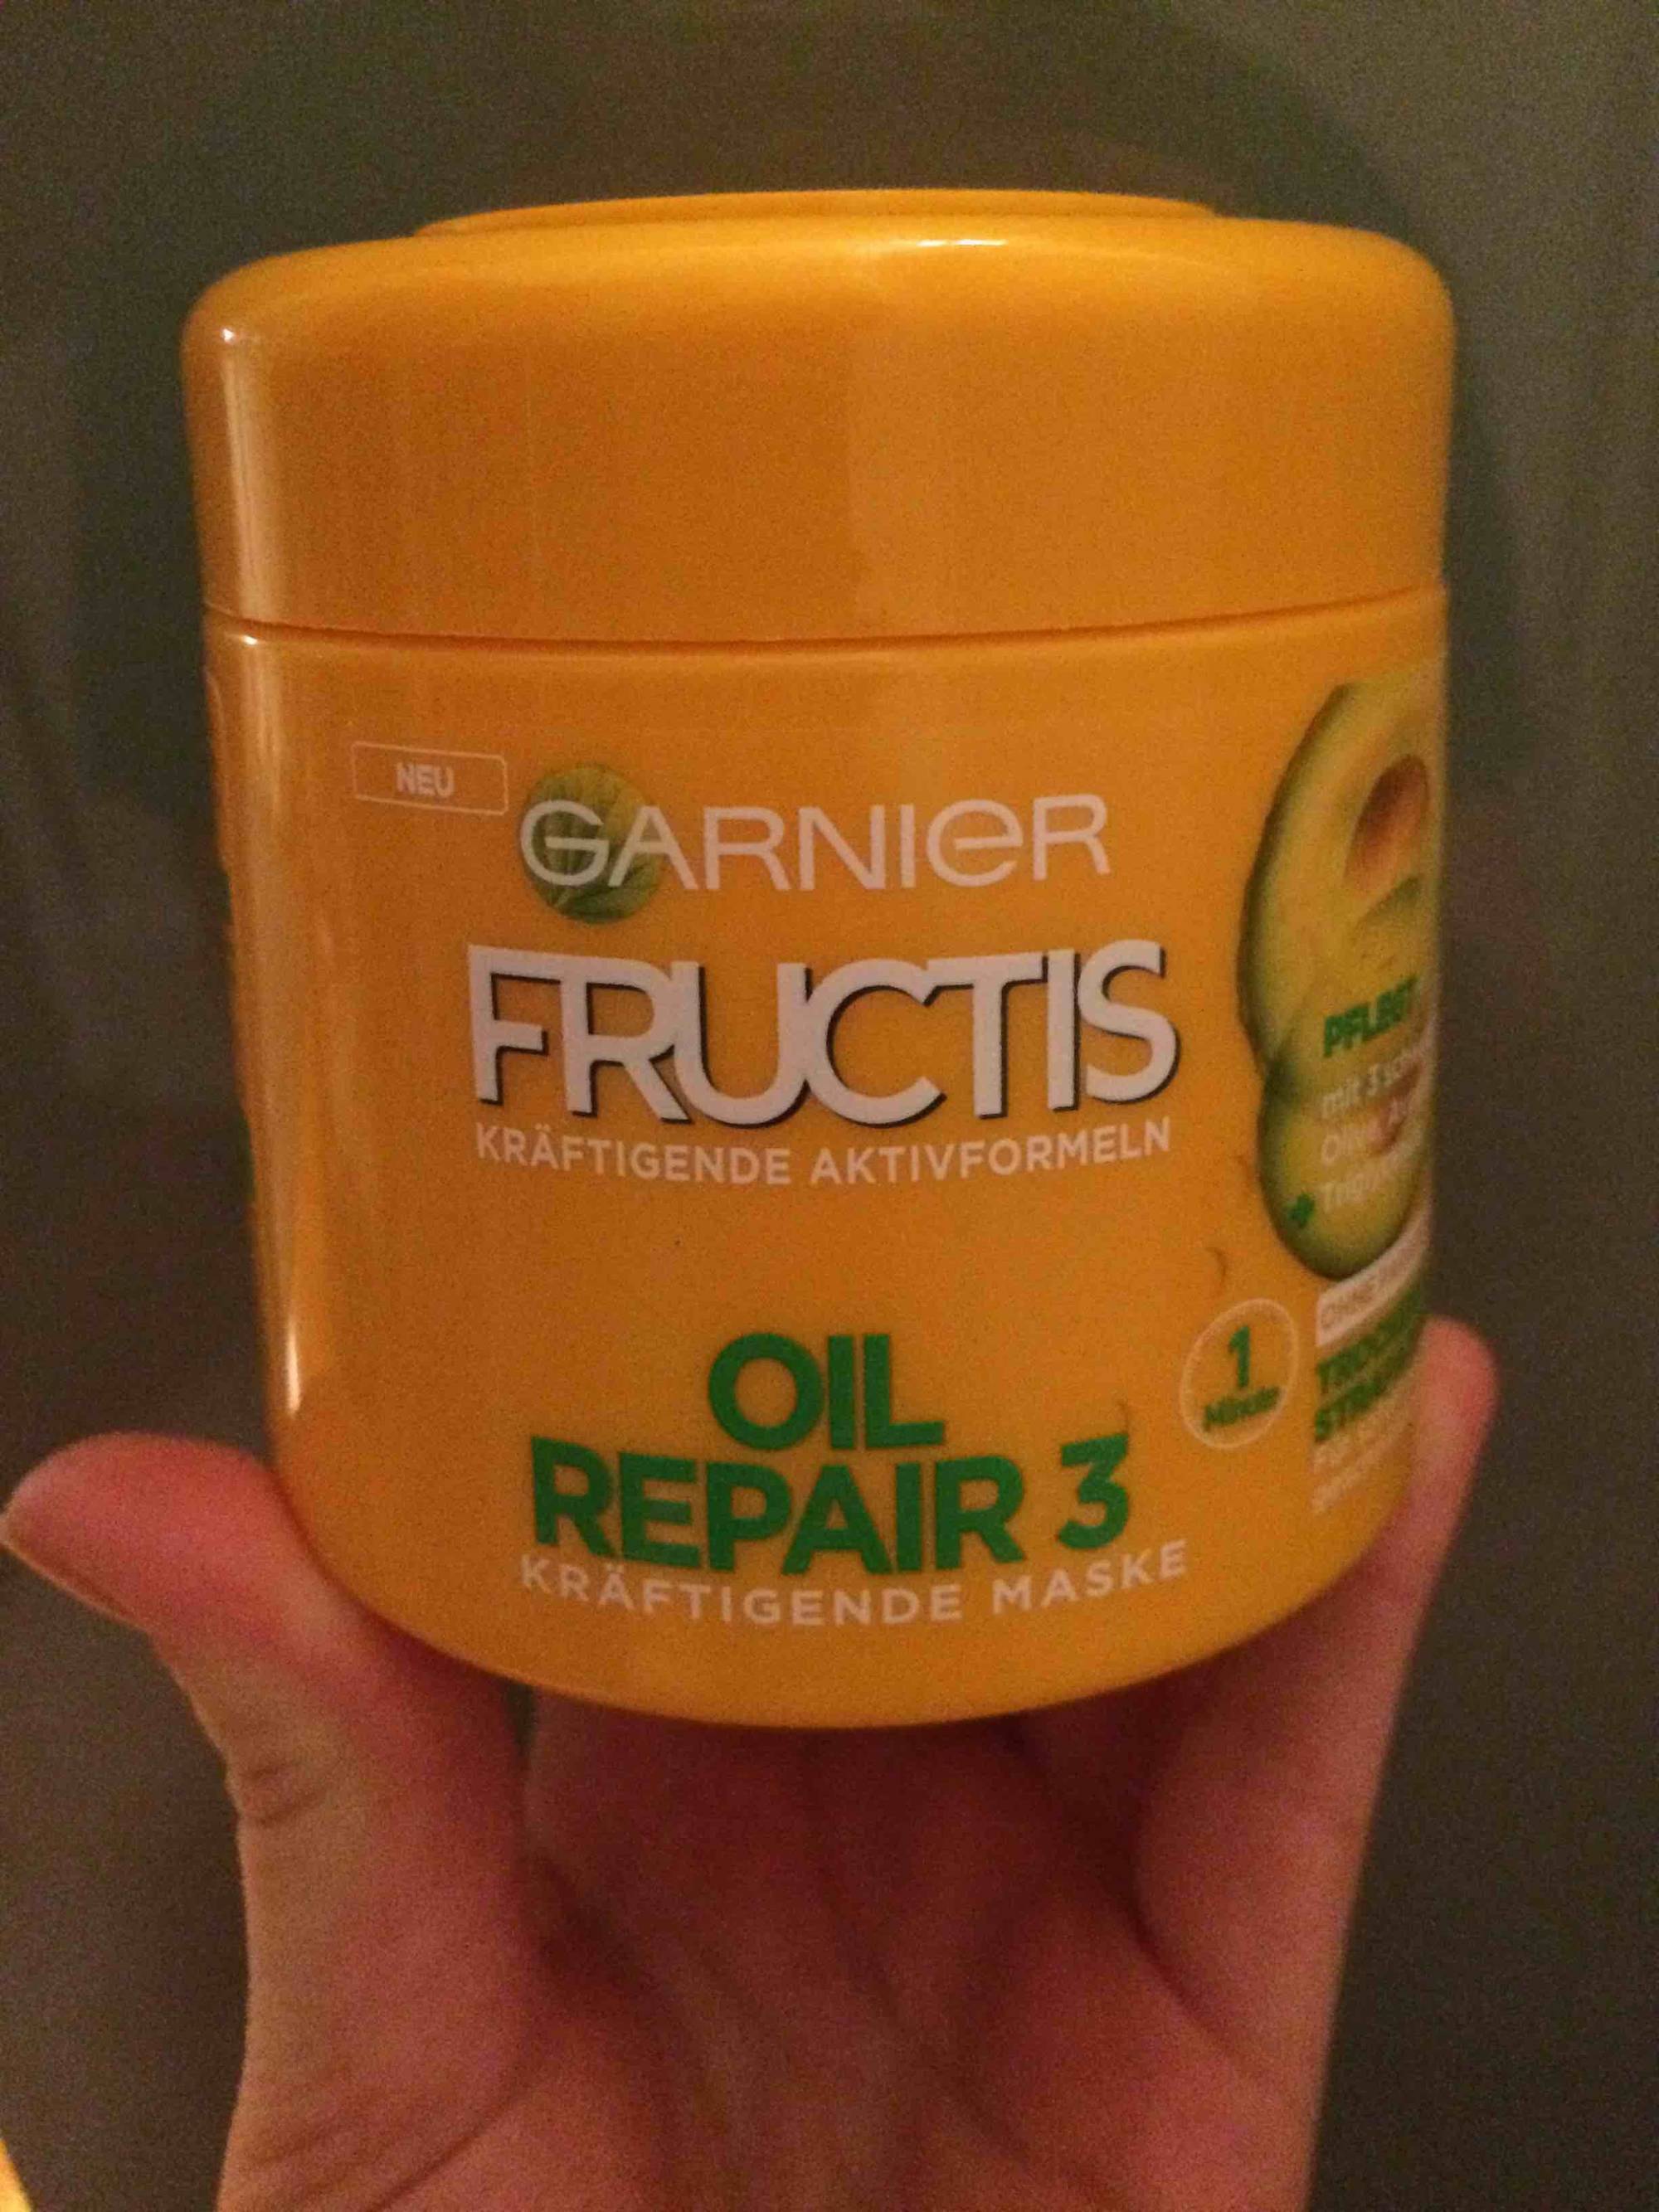 GARNIER - Fructis oil repair 3 - Kräftigende maske